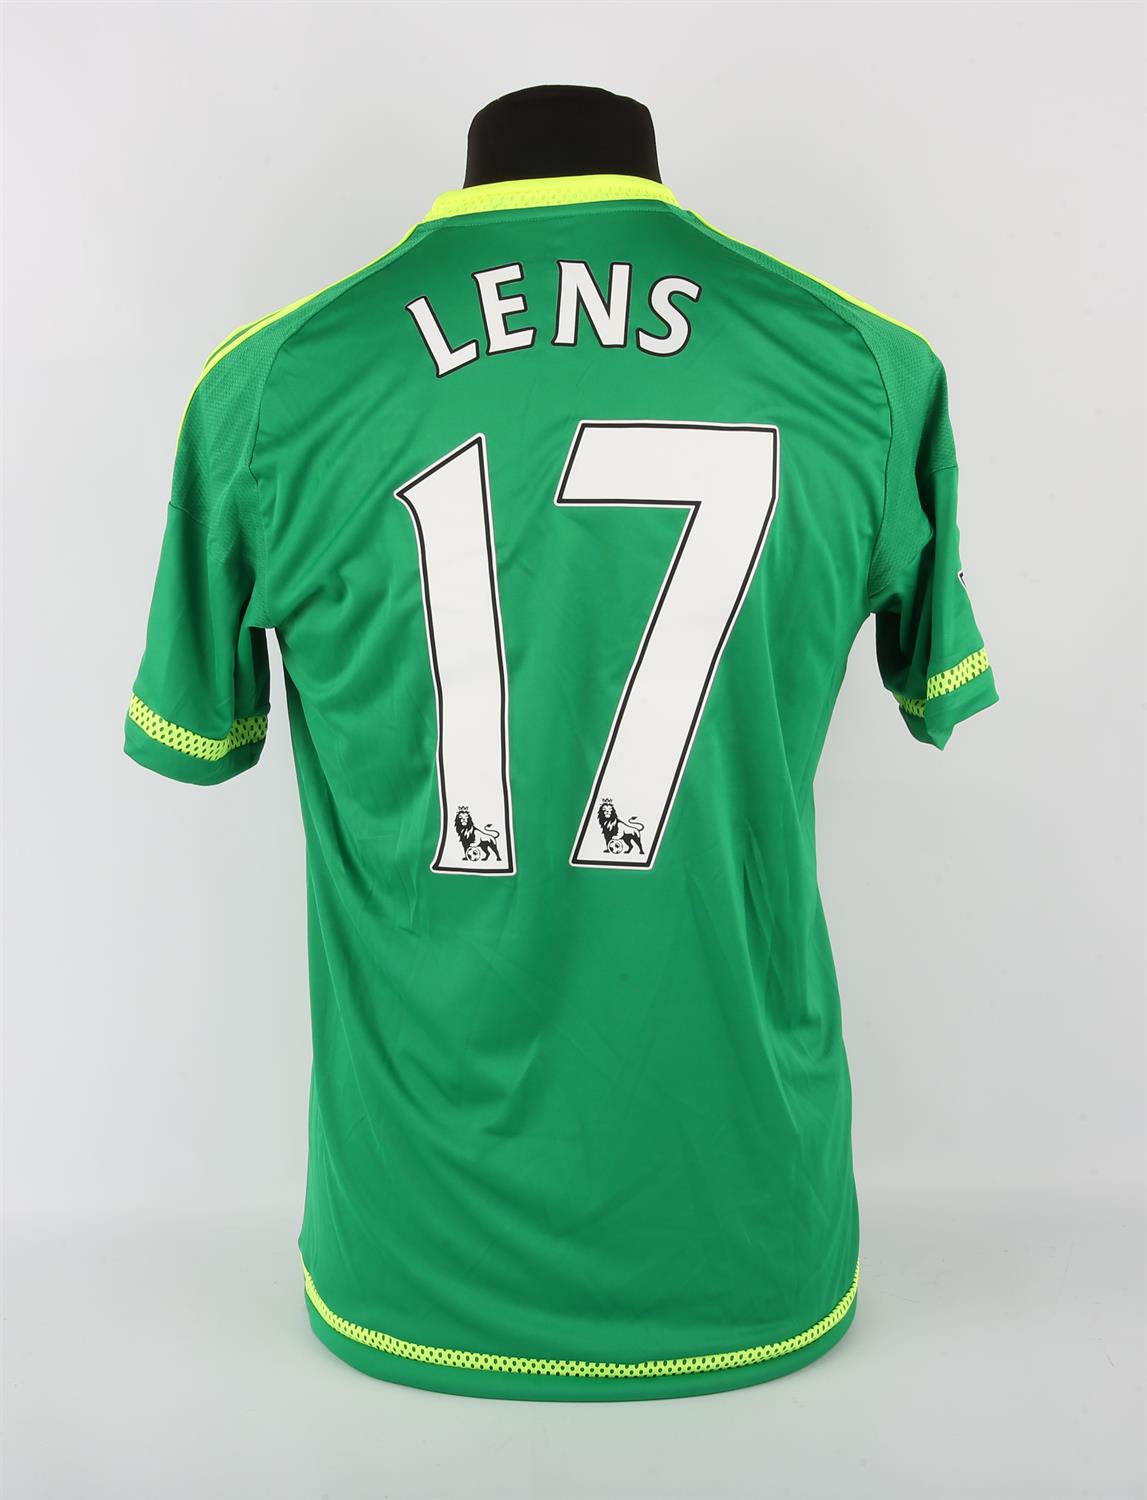 Sunderland A.F.C. Football club, Jeremain Lens (No.17) 2015-2016 Season shirt, S/S.